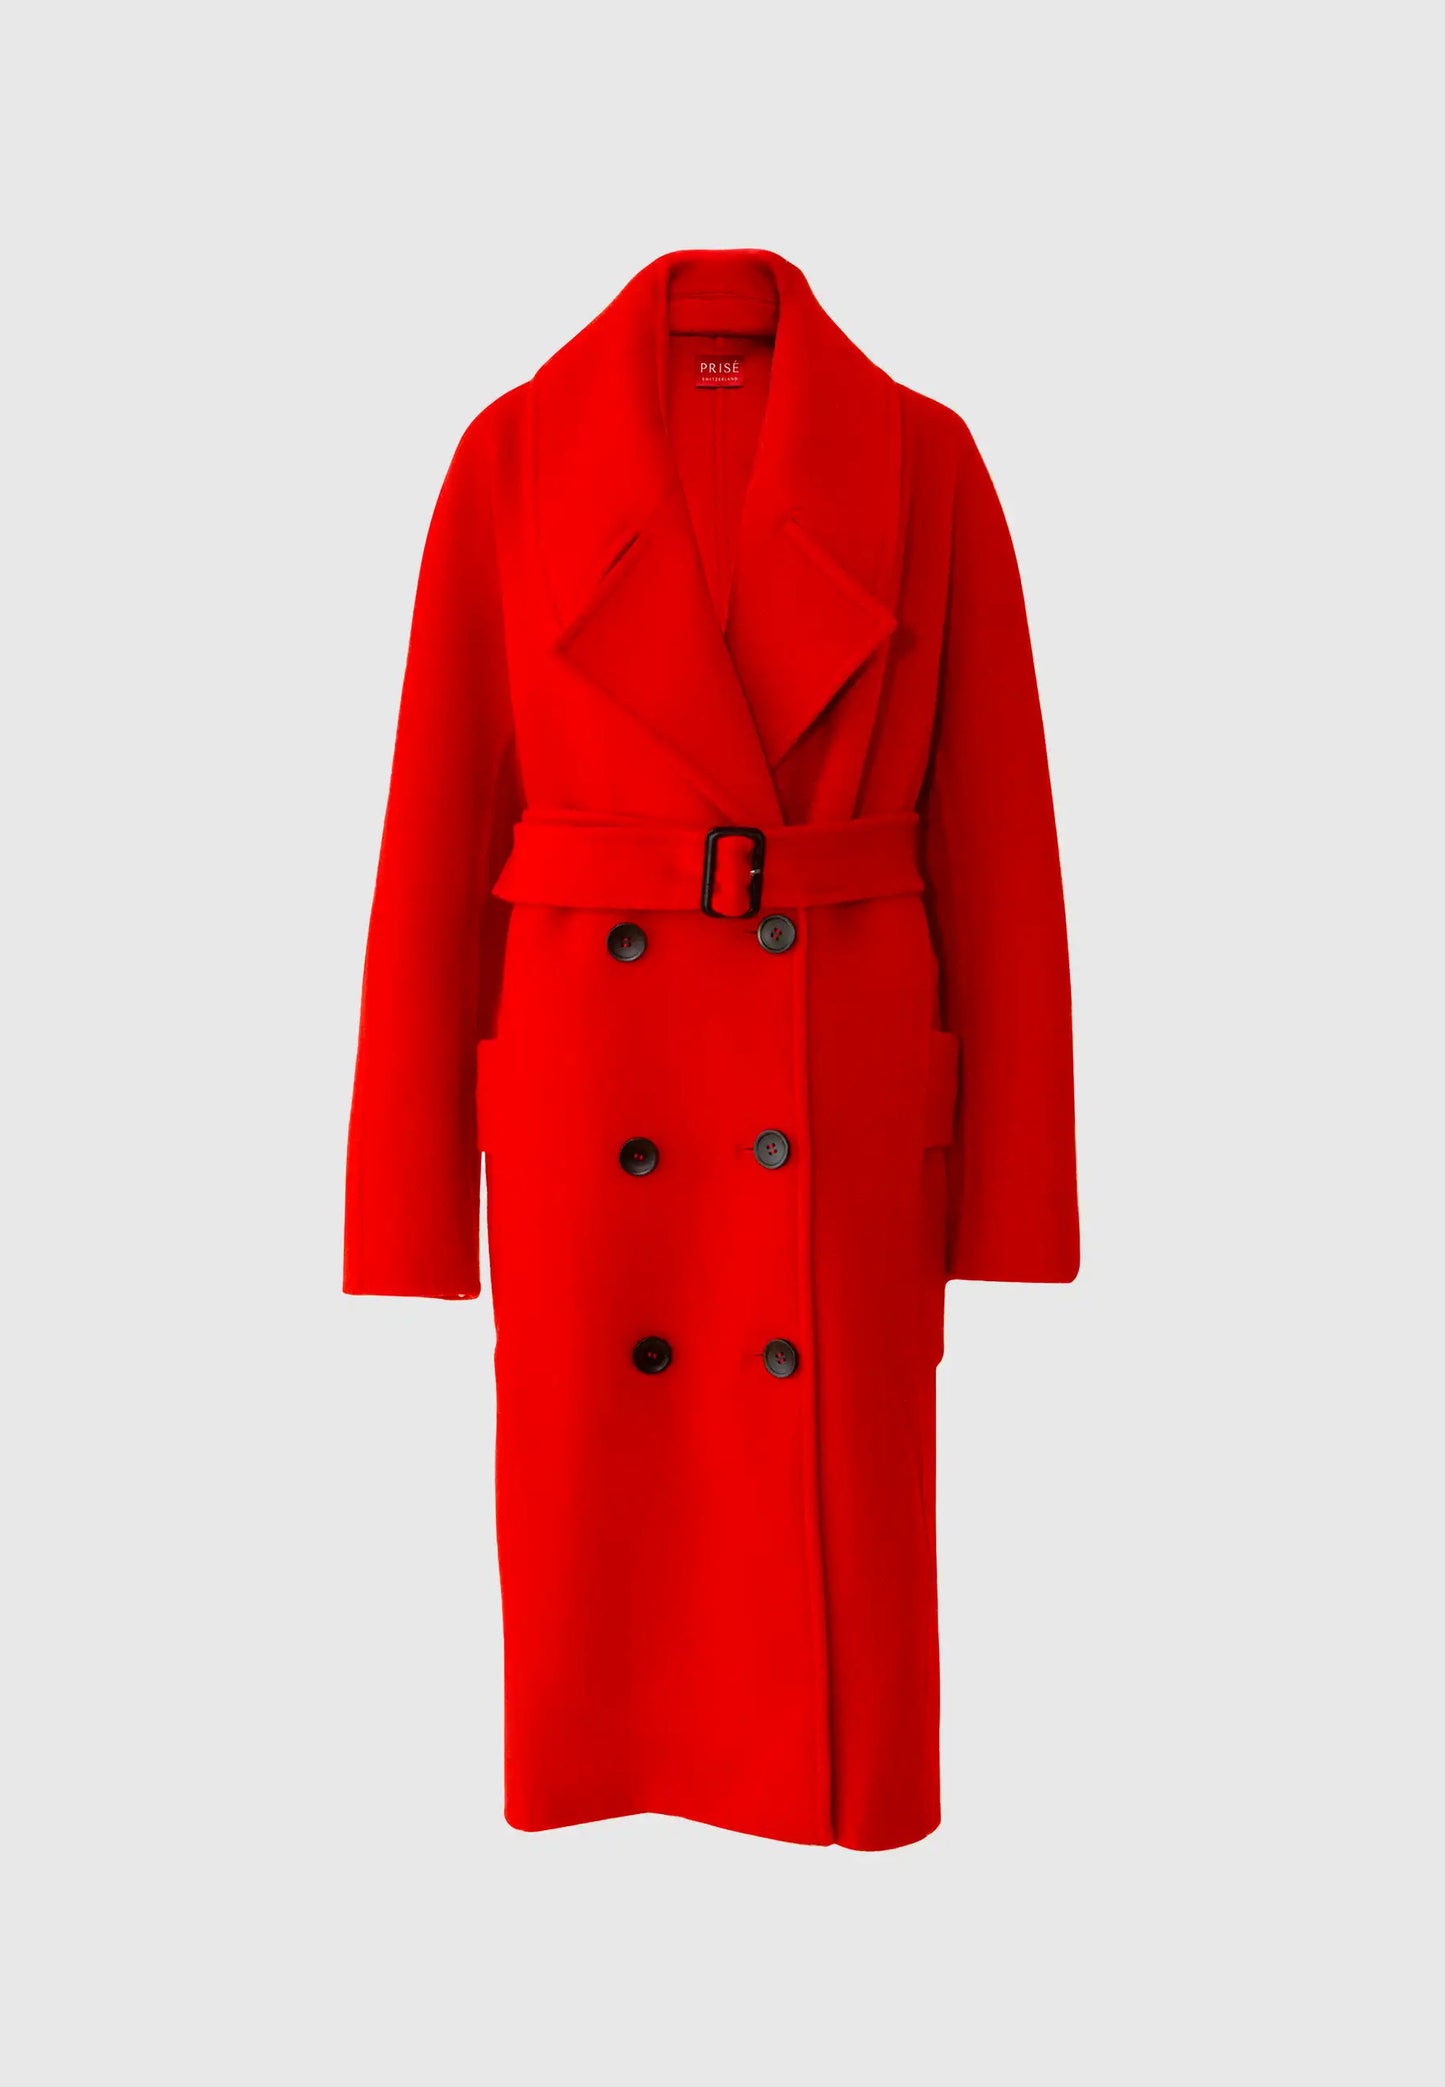 PRISÉ Switzerland Zurich Coat is a red wool coat